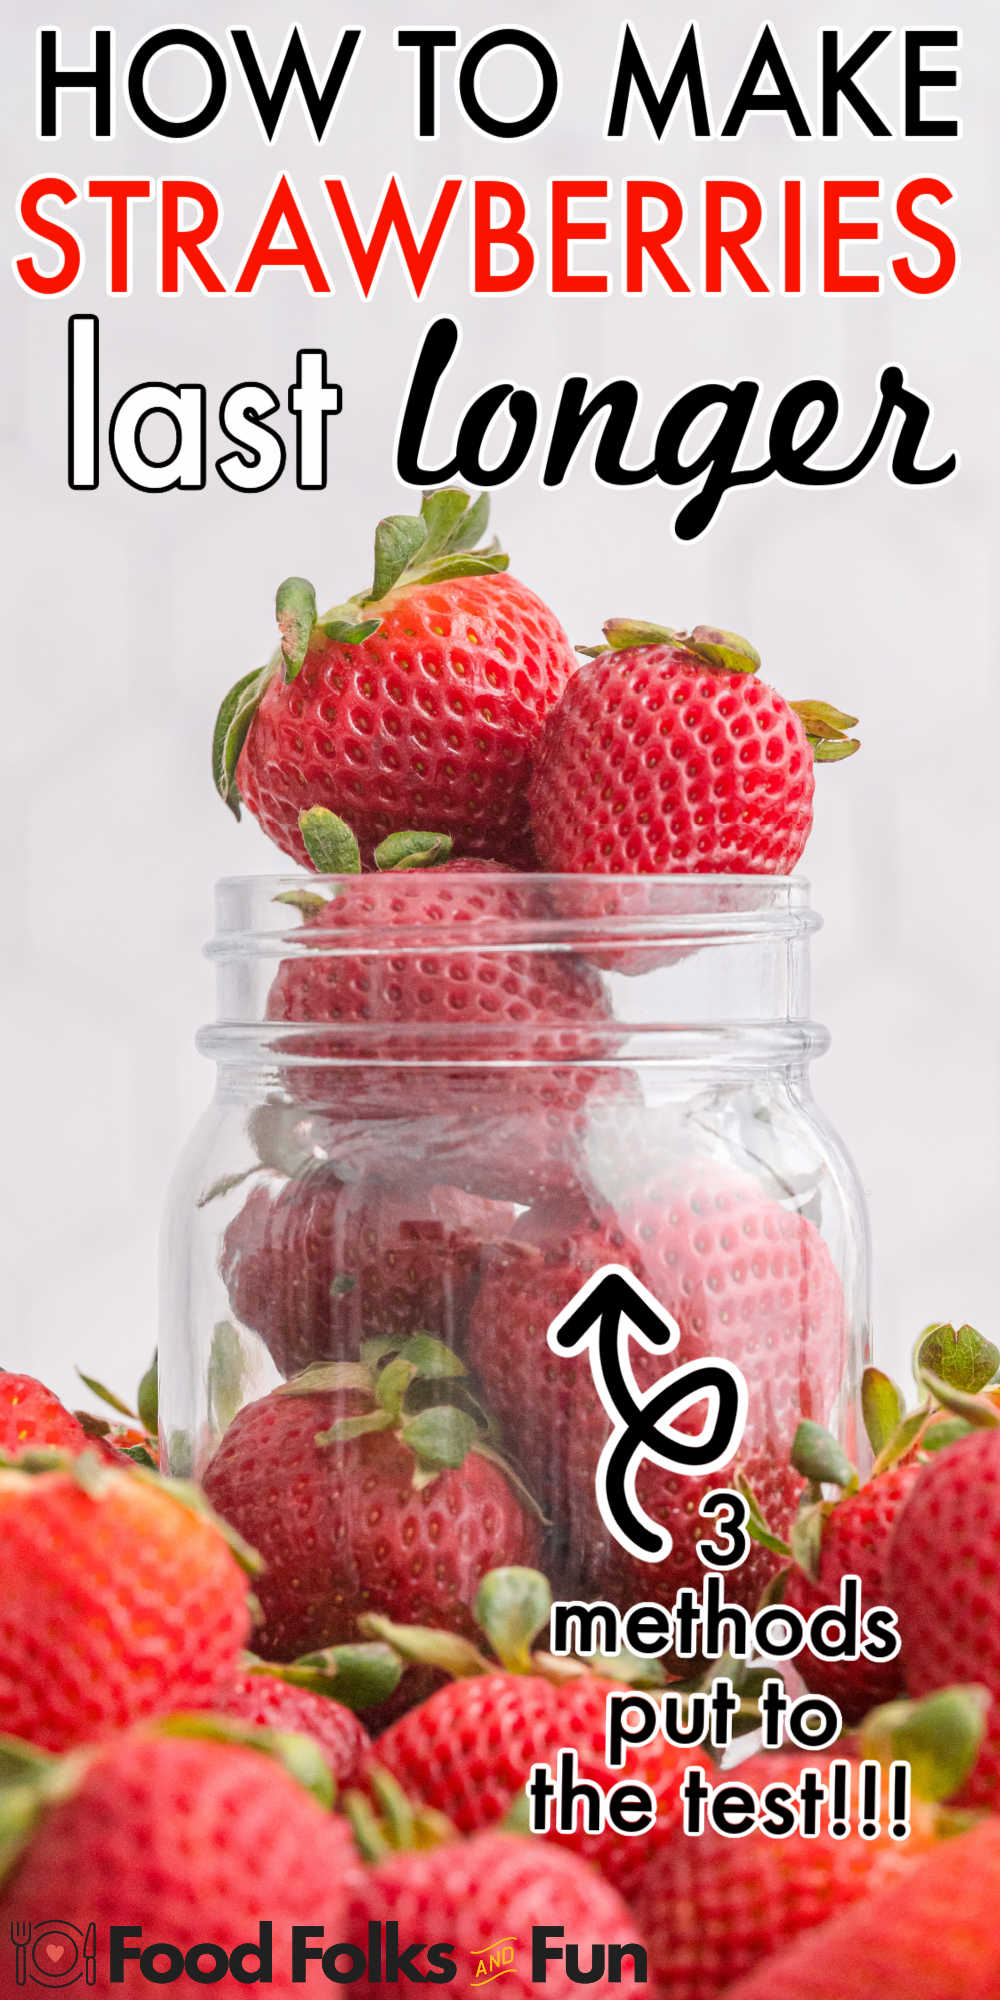 Do strawberries last longer in the fridge or on the counter